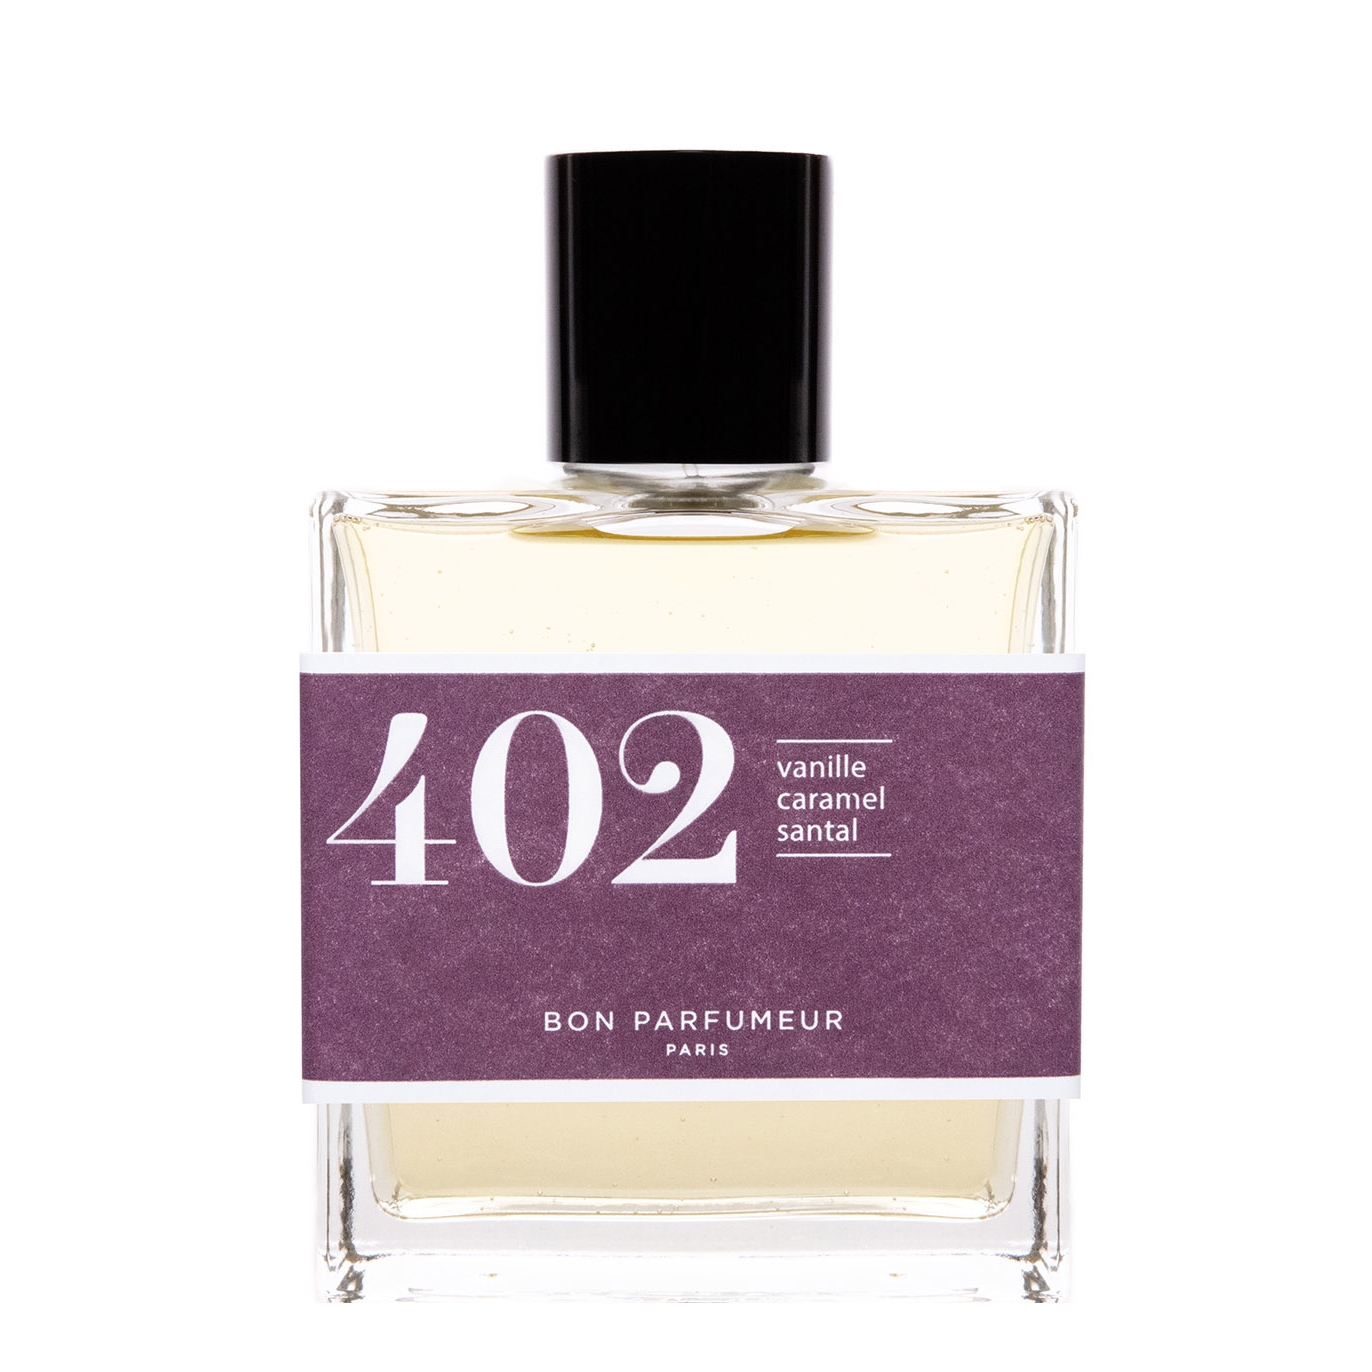 Bon Parfumeur 402 Vanille, Caramel, Santal Eau De Parfum 100ml